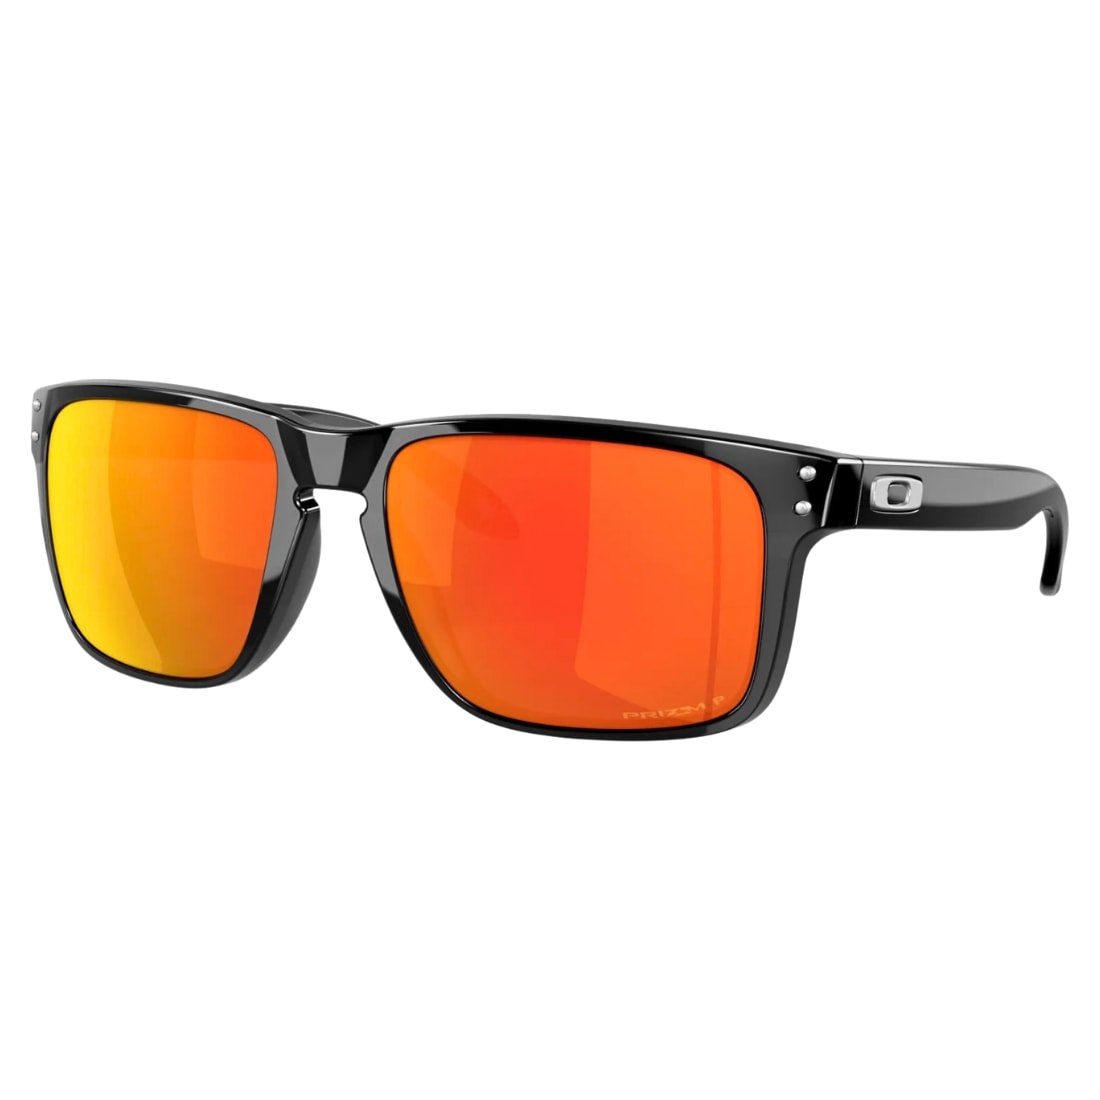 Oakley Holbrook XL Polarised Sunglasses - Black Ink/Prizm Ruby Polarized - Square/Rectangular Sunglasses by Oakley